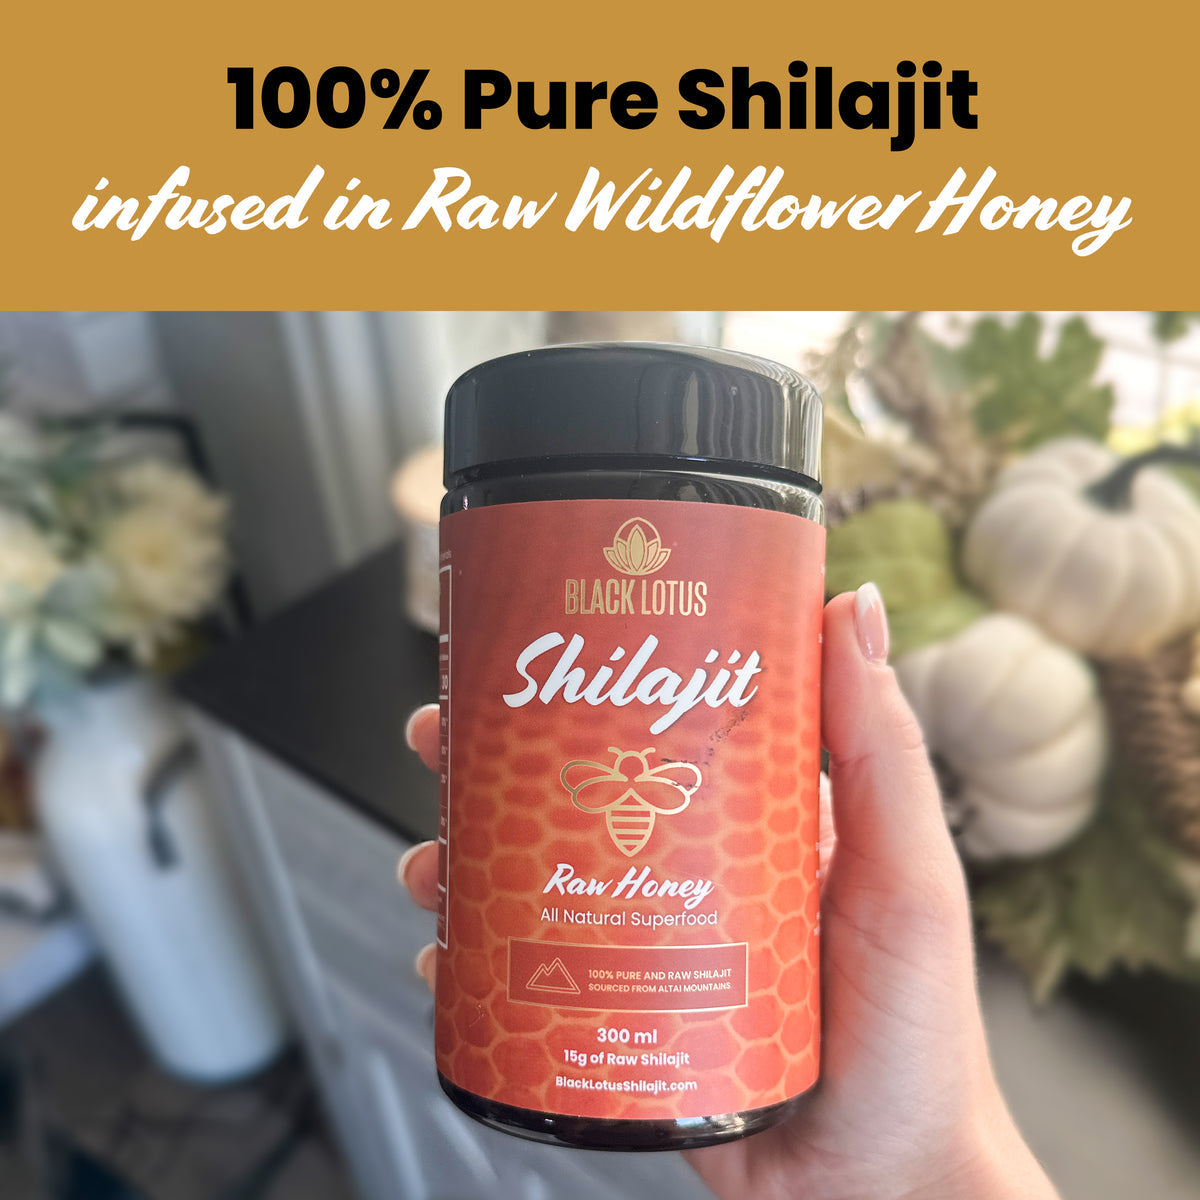 Shilajit Raw Honey